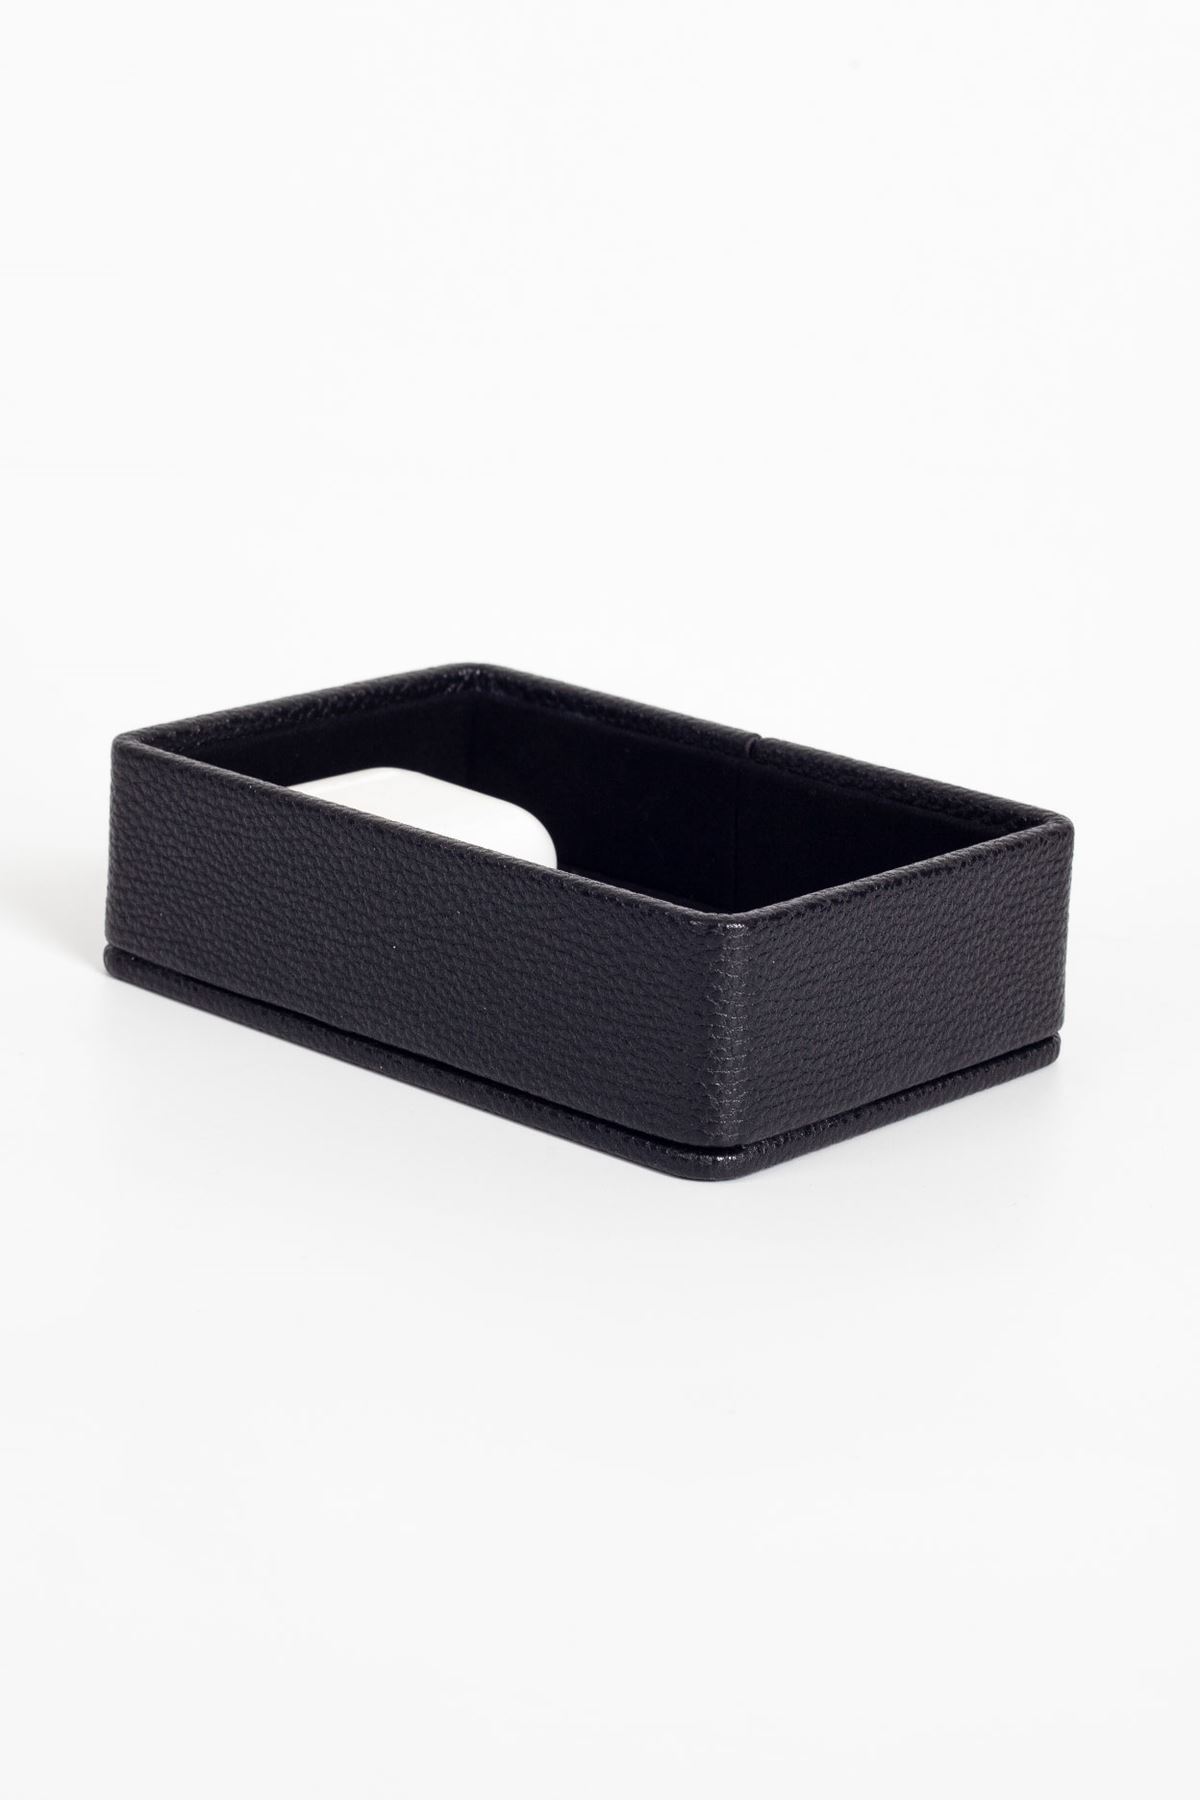 Felix Leather Accessory Box Black